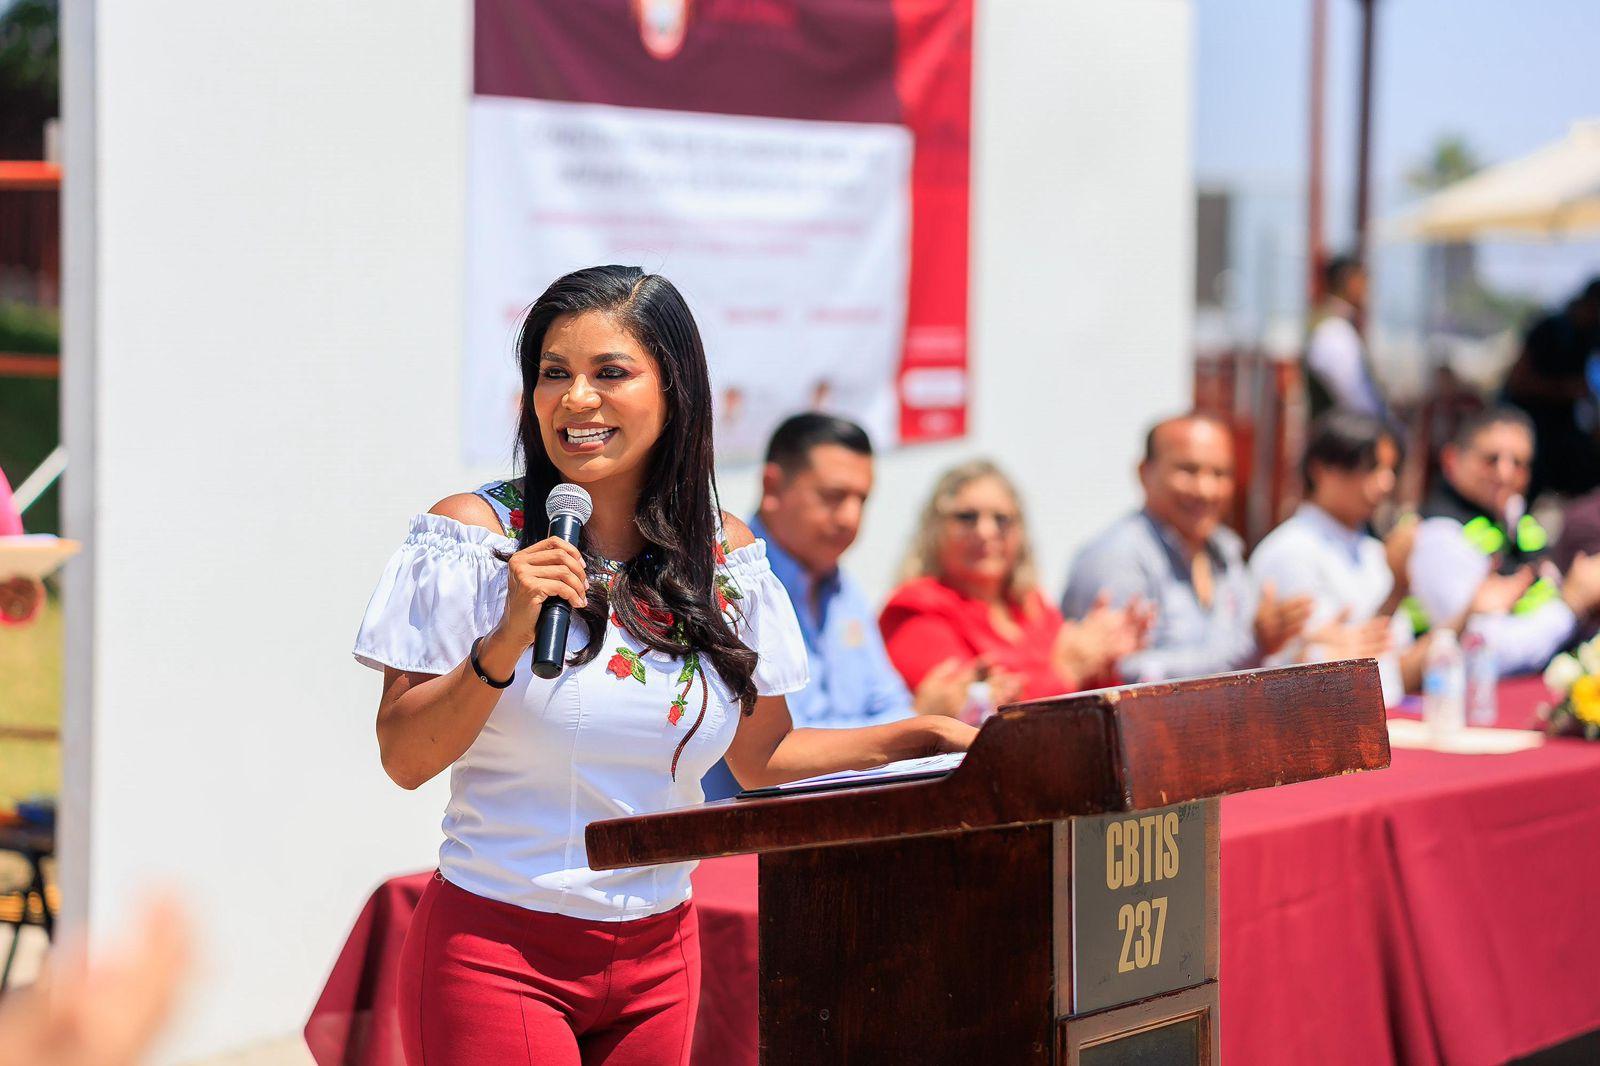 Inaugura alcaldesa Montserrat Caballero techumbre en CBTIS 237 de la colonia Mariano Matamoros